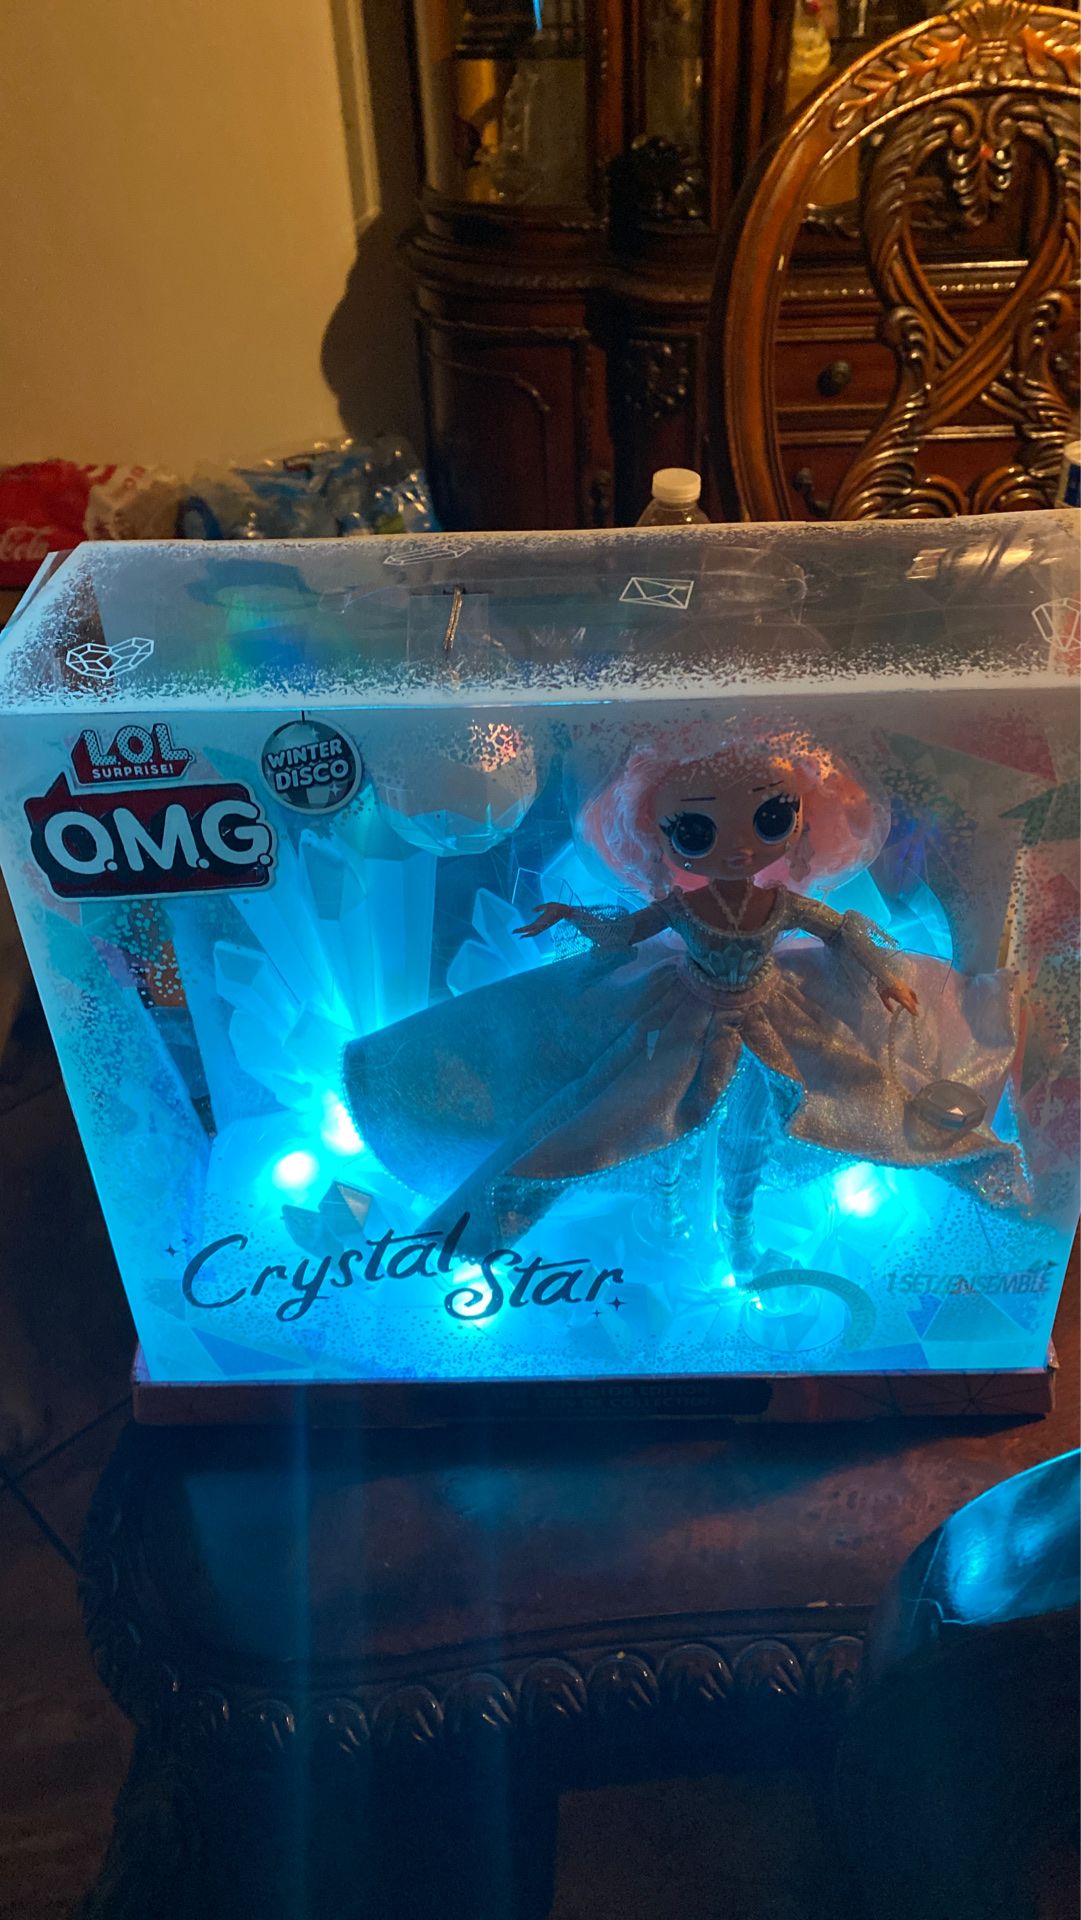 LOL SURPRISE O.M.G winter DISCO Crystal star